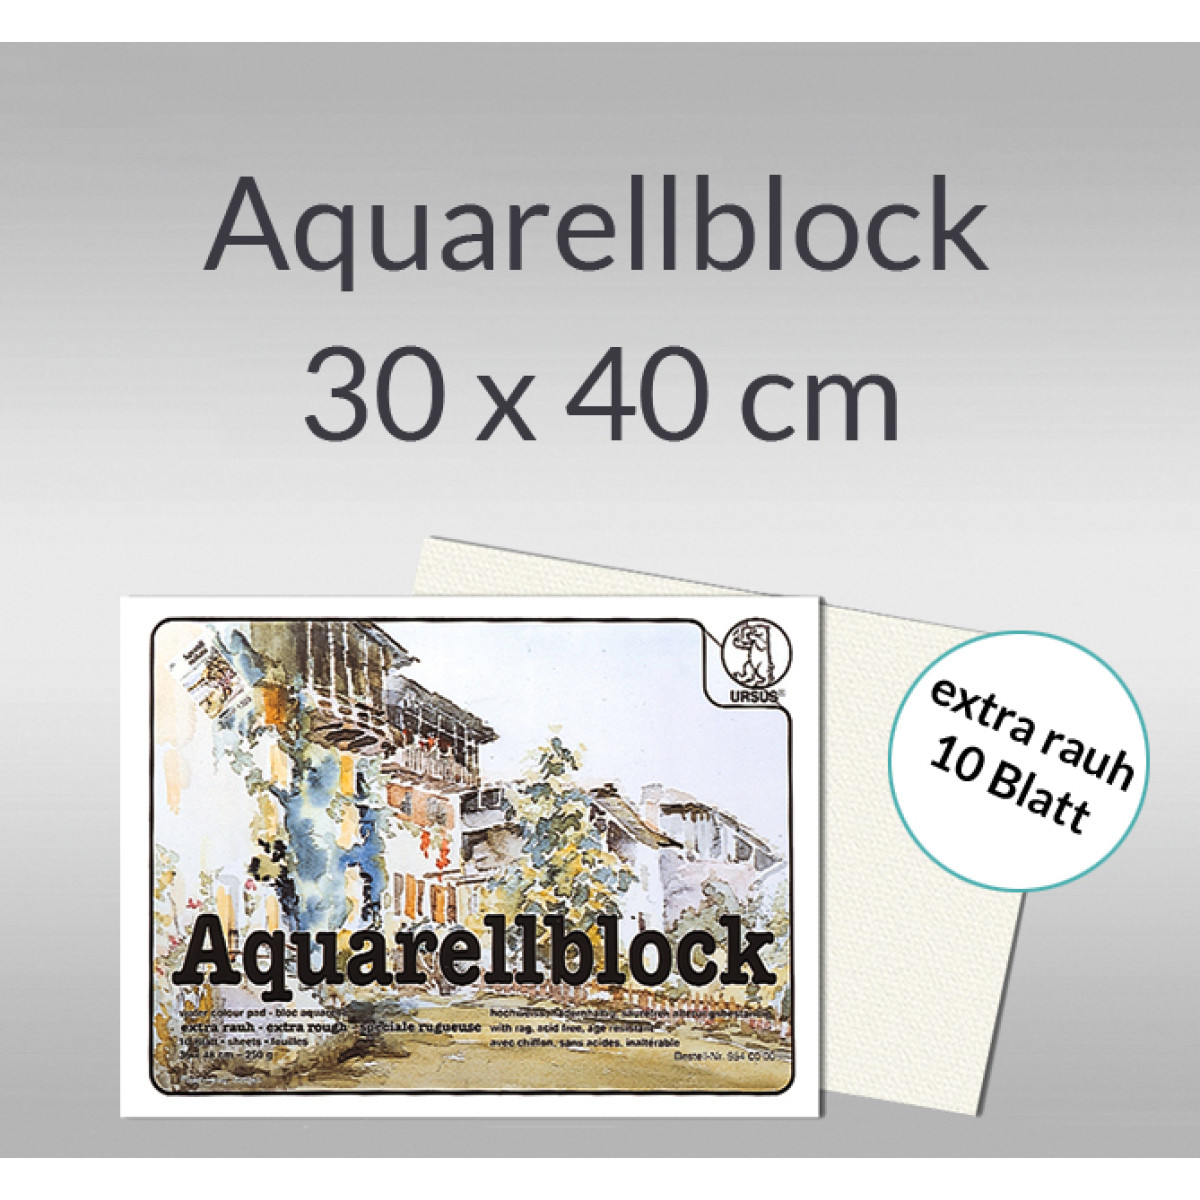 Aquarellblock extra rauh 250 g/qm 30 x 40 cm